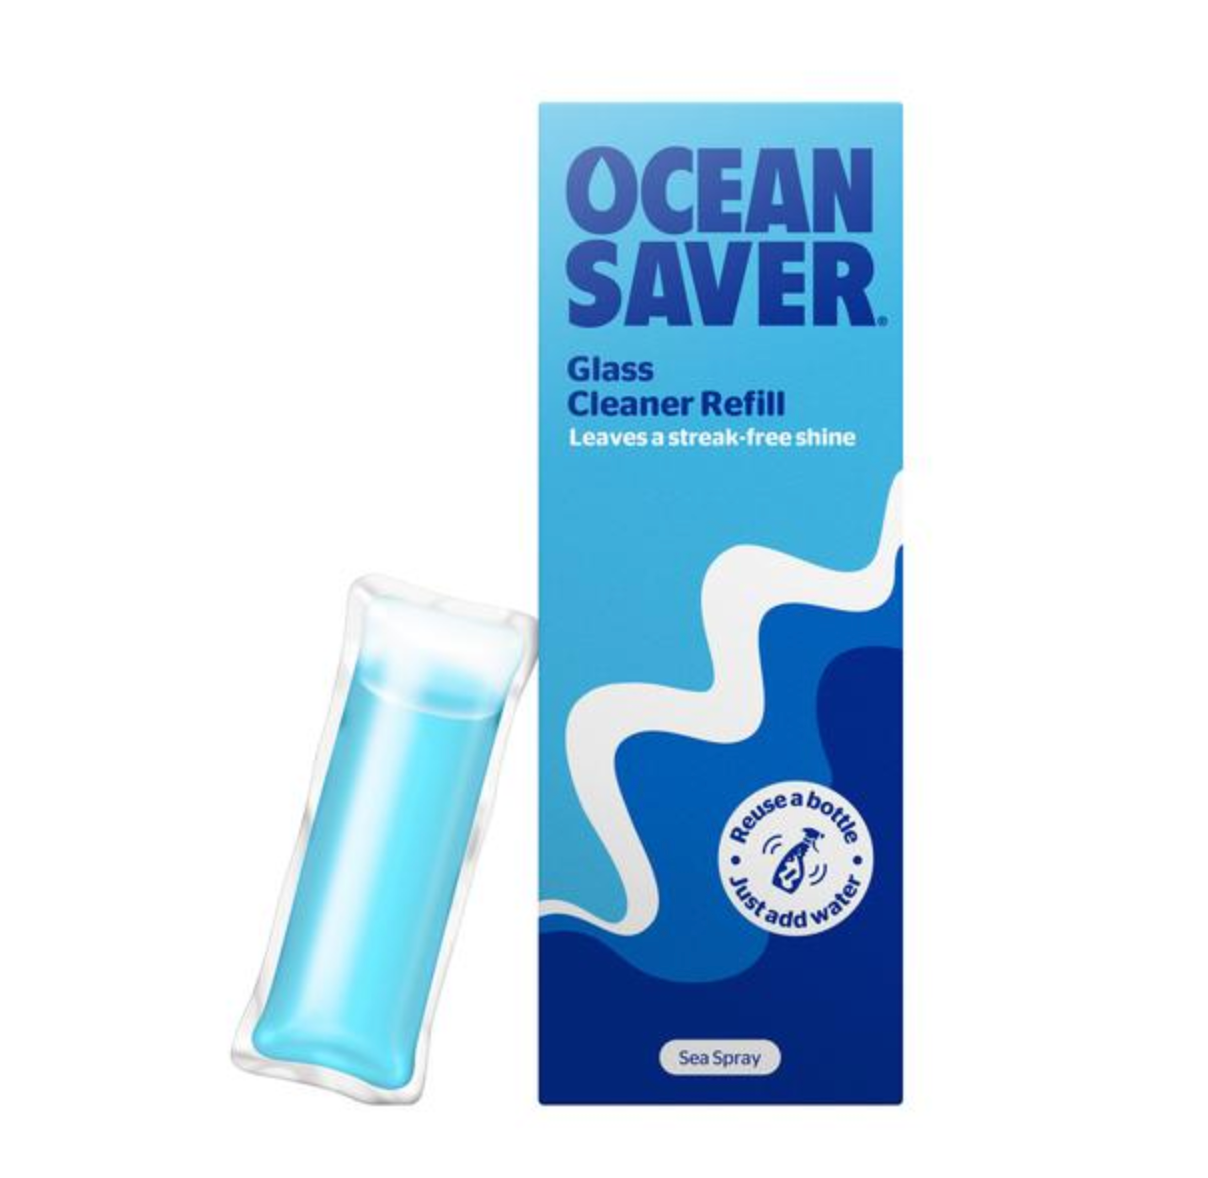 Ocean Saver Ocean Saver Glass Cleaner - Sea Spray